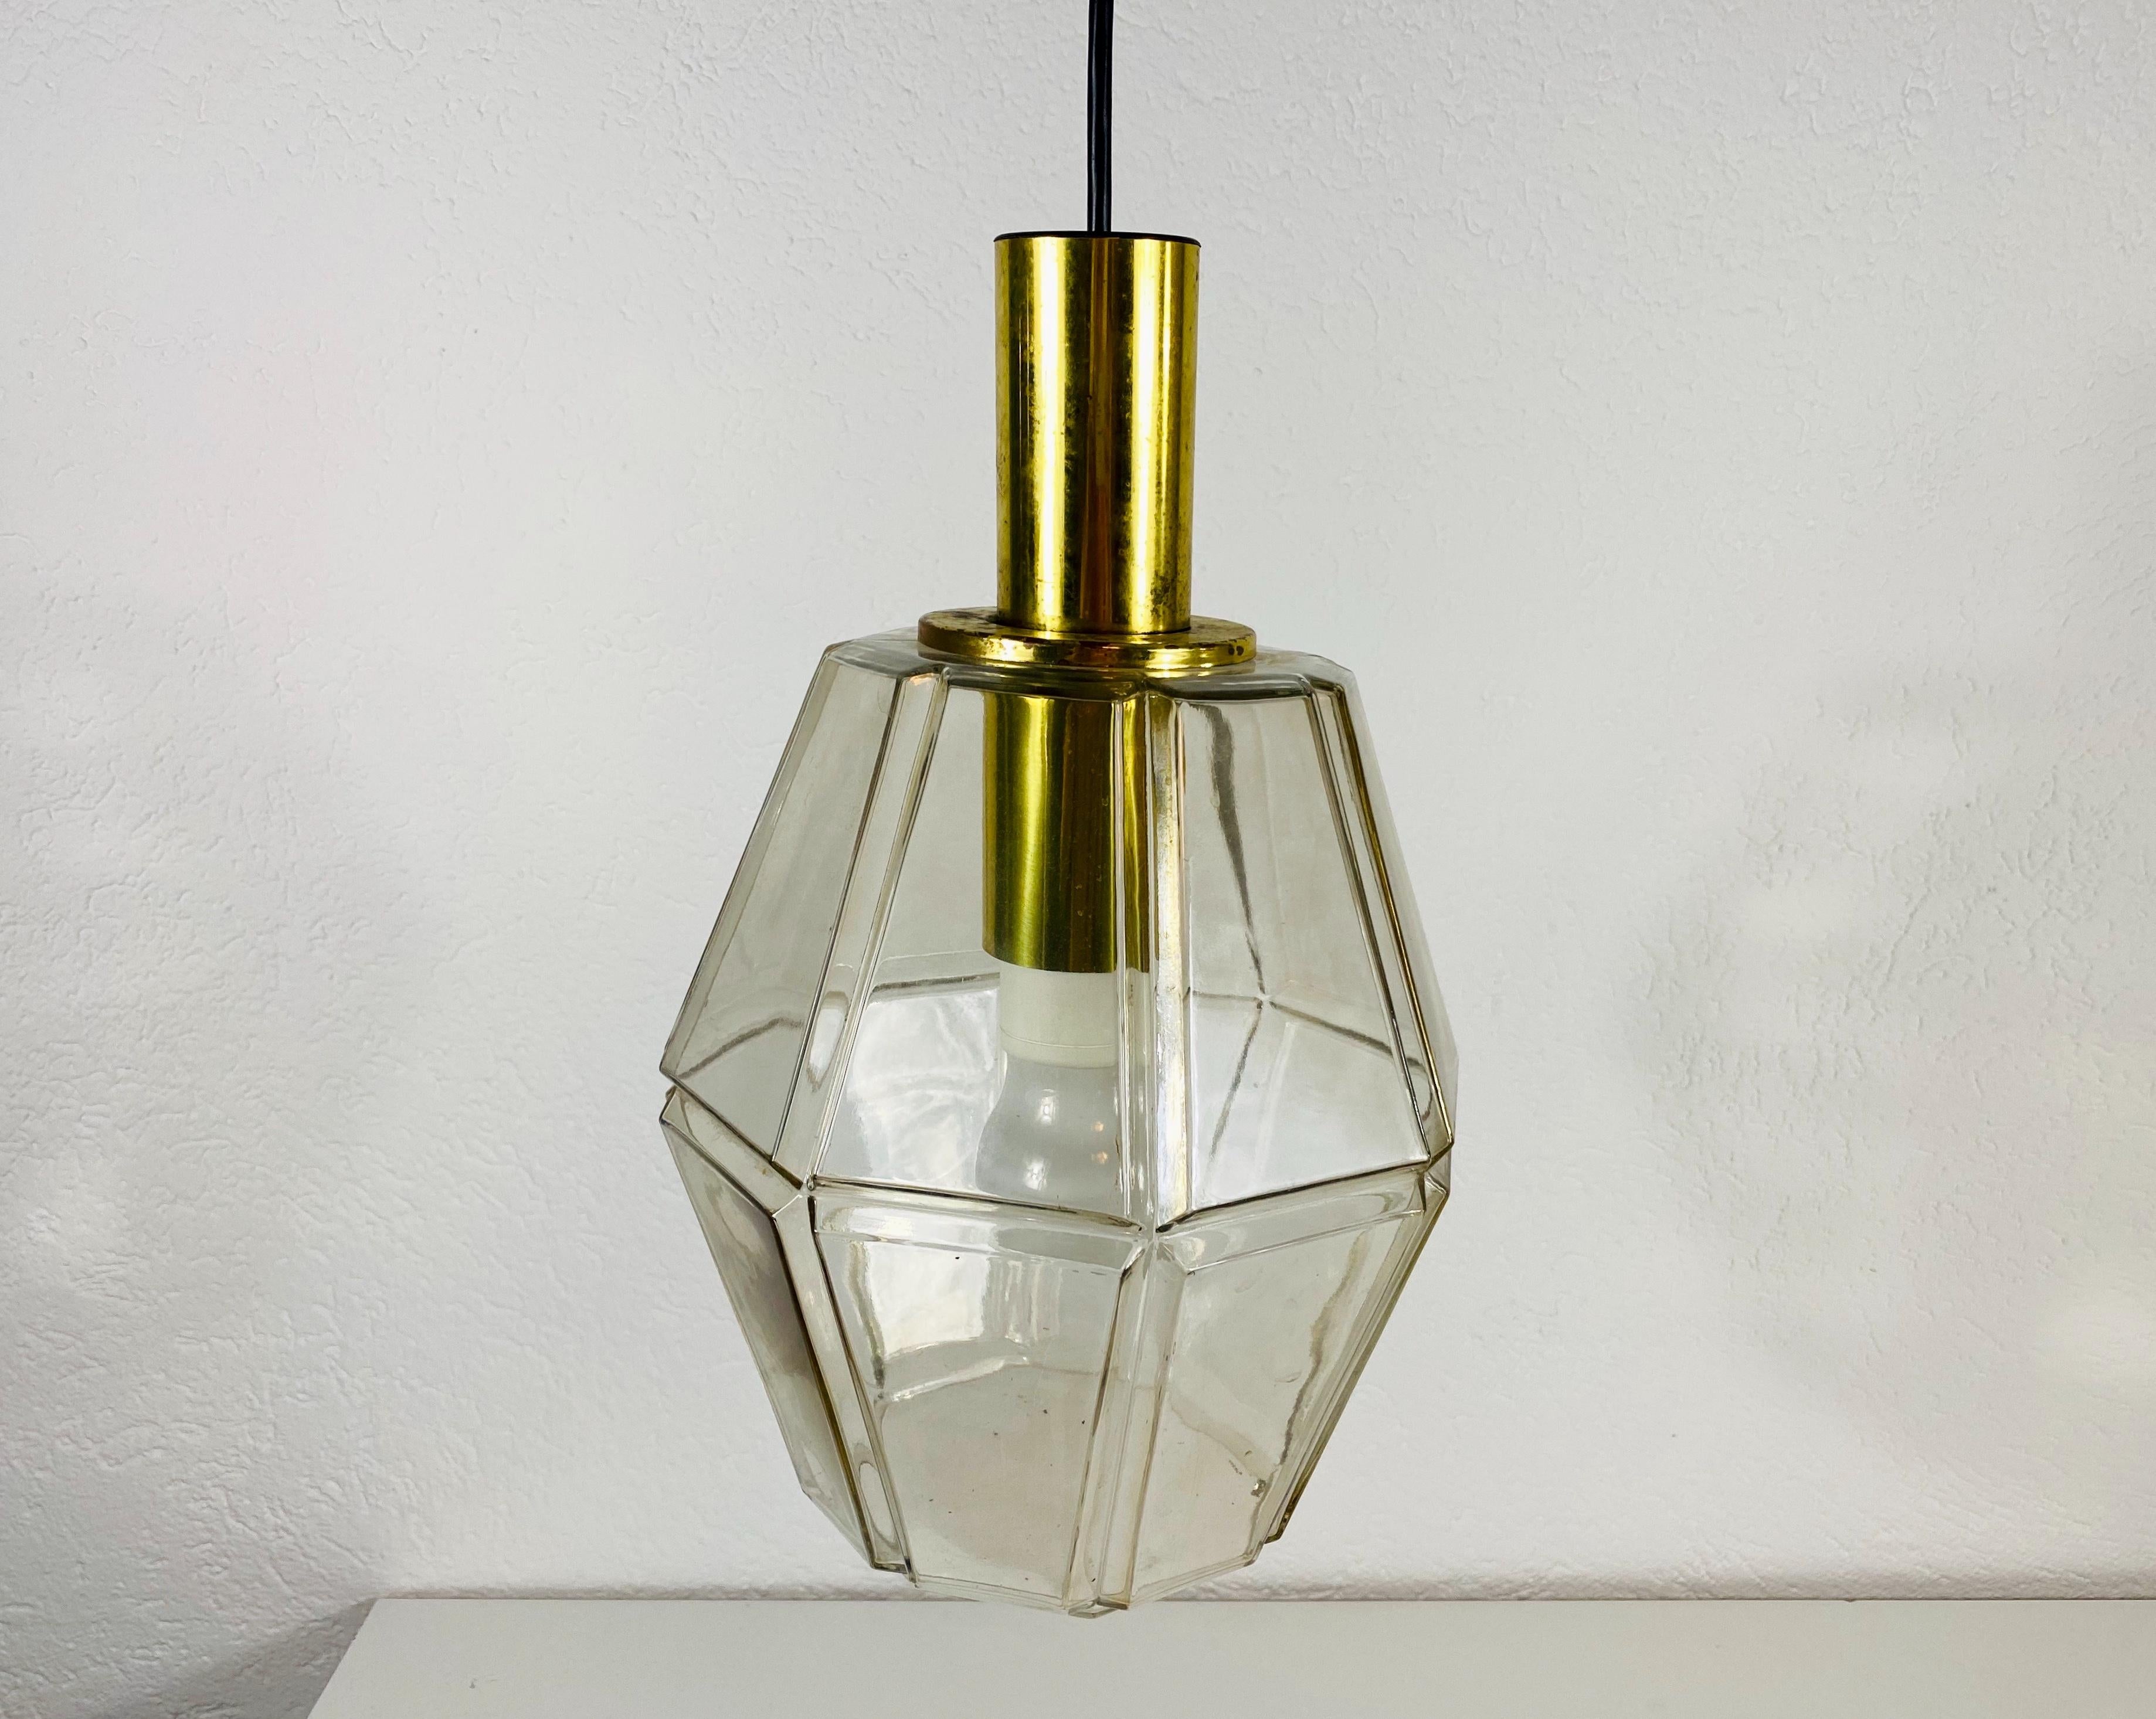 German Midcentury Brass and Glass Pendant Lamp by Glashütte Limburg, 1960s For Sale